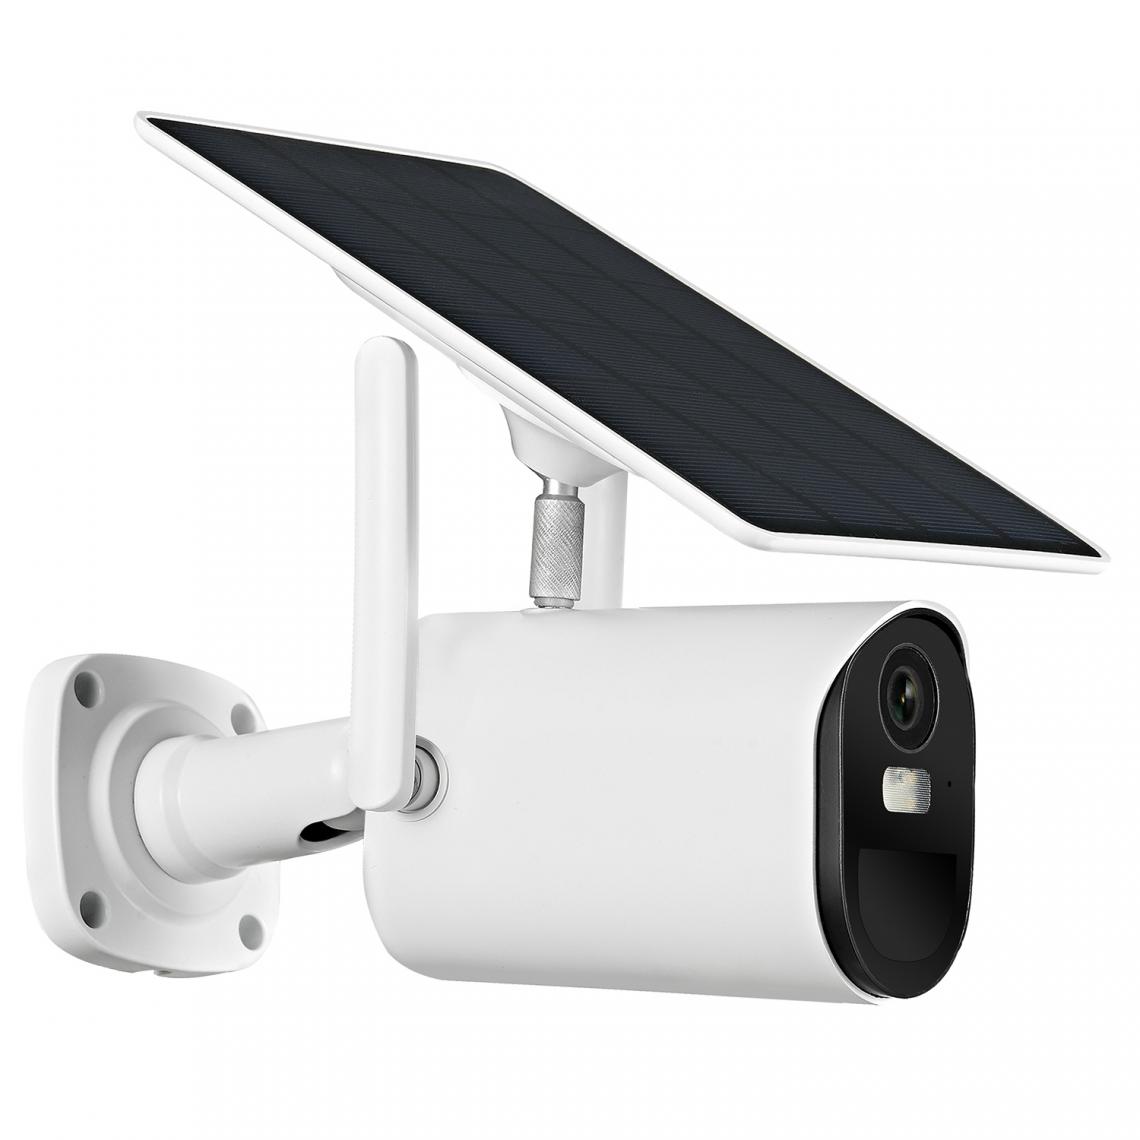 Yonis - Caméra IP FHD LED IR Étanche WiFi - Caméra de surveillance connectée